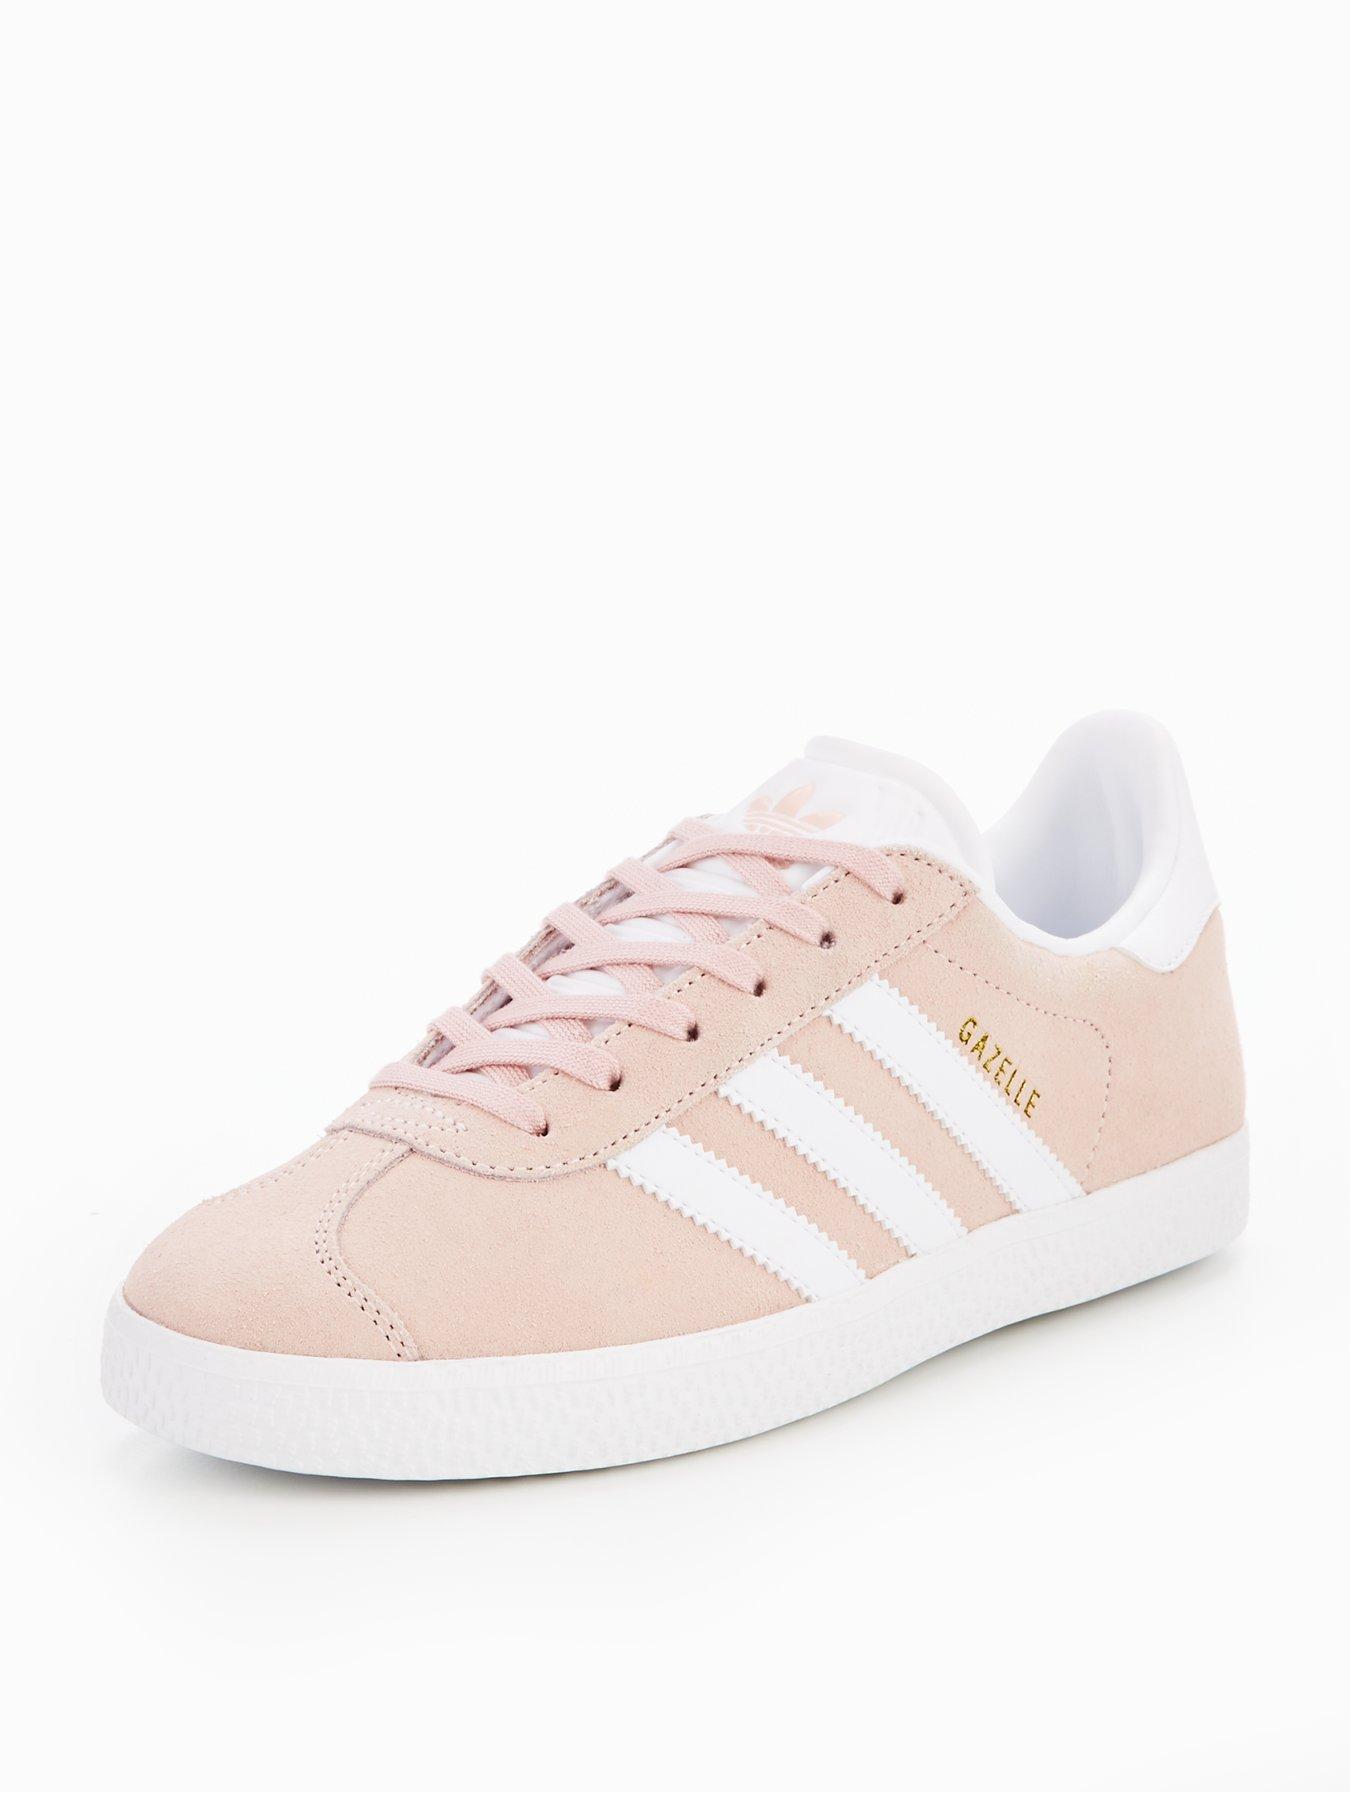 adidas gazelle junior white and pink